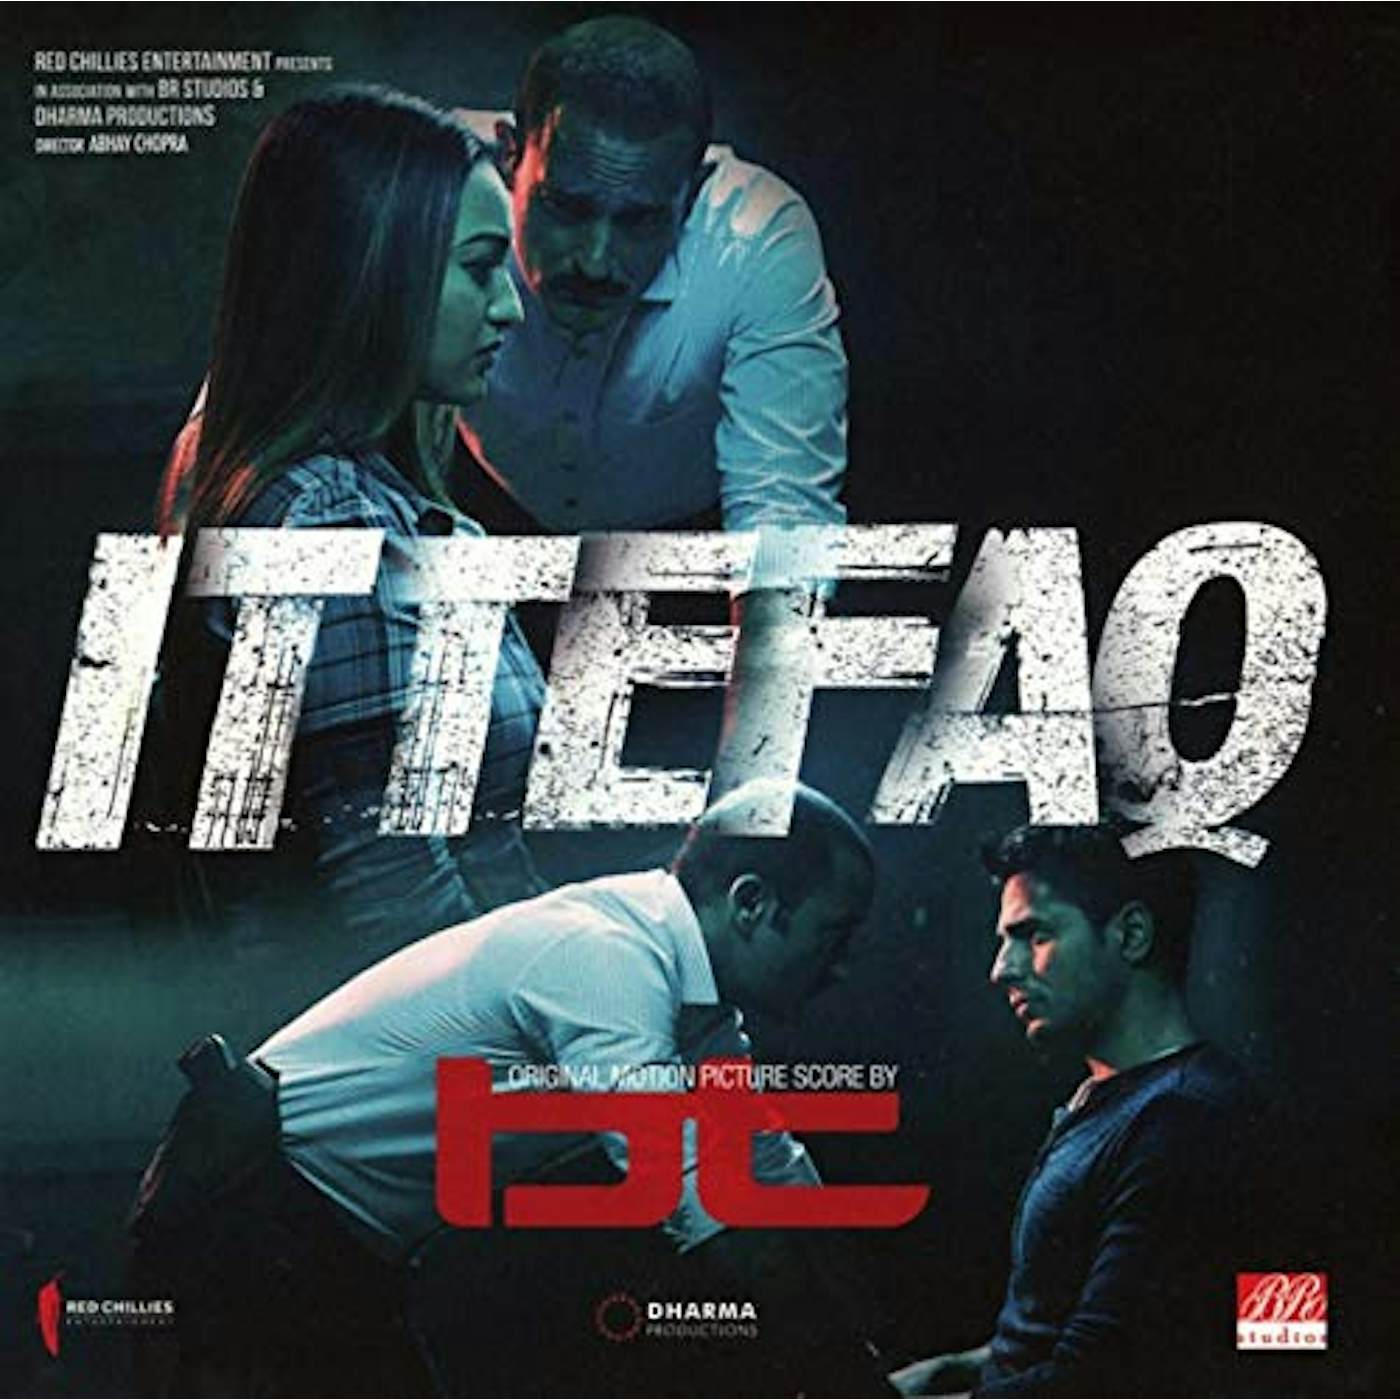 BT ITTEFAQ (OFFICIAL ORCHESTRAL SCORE ALBUM) / Original Soundtrack CD